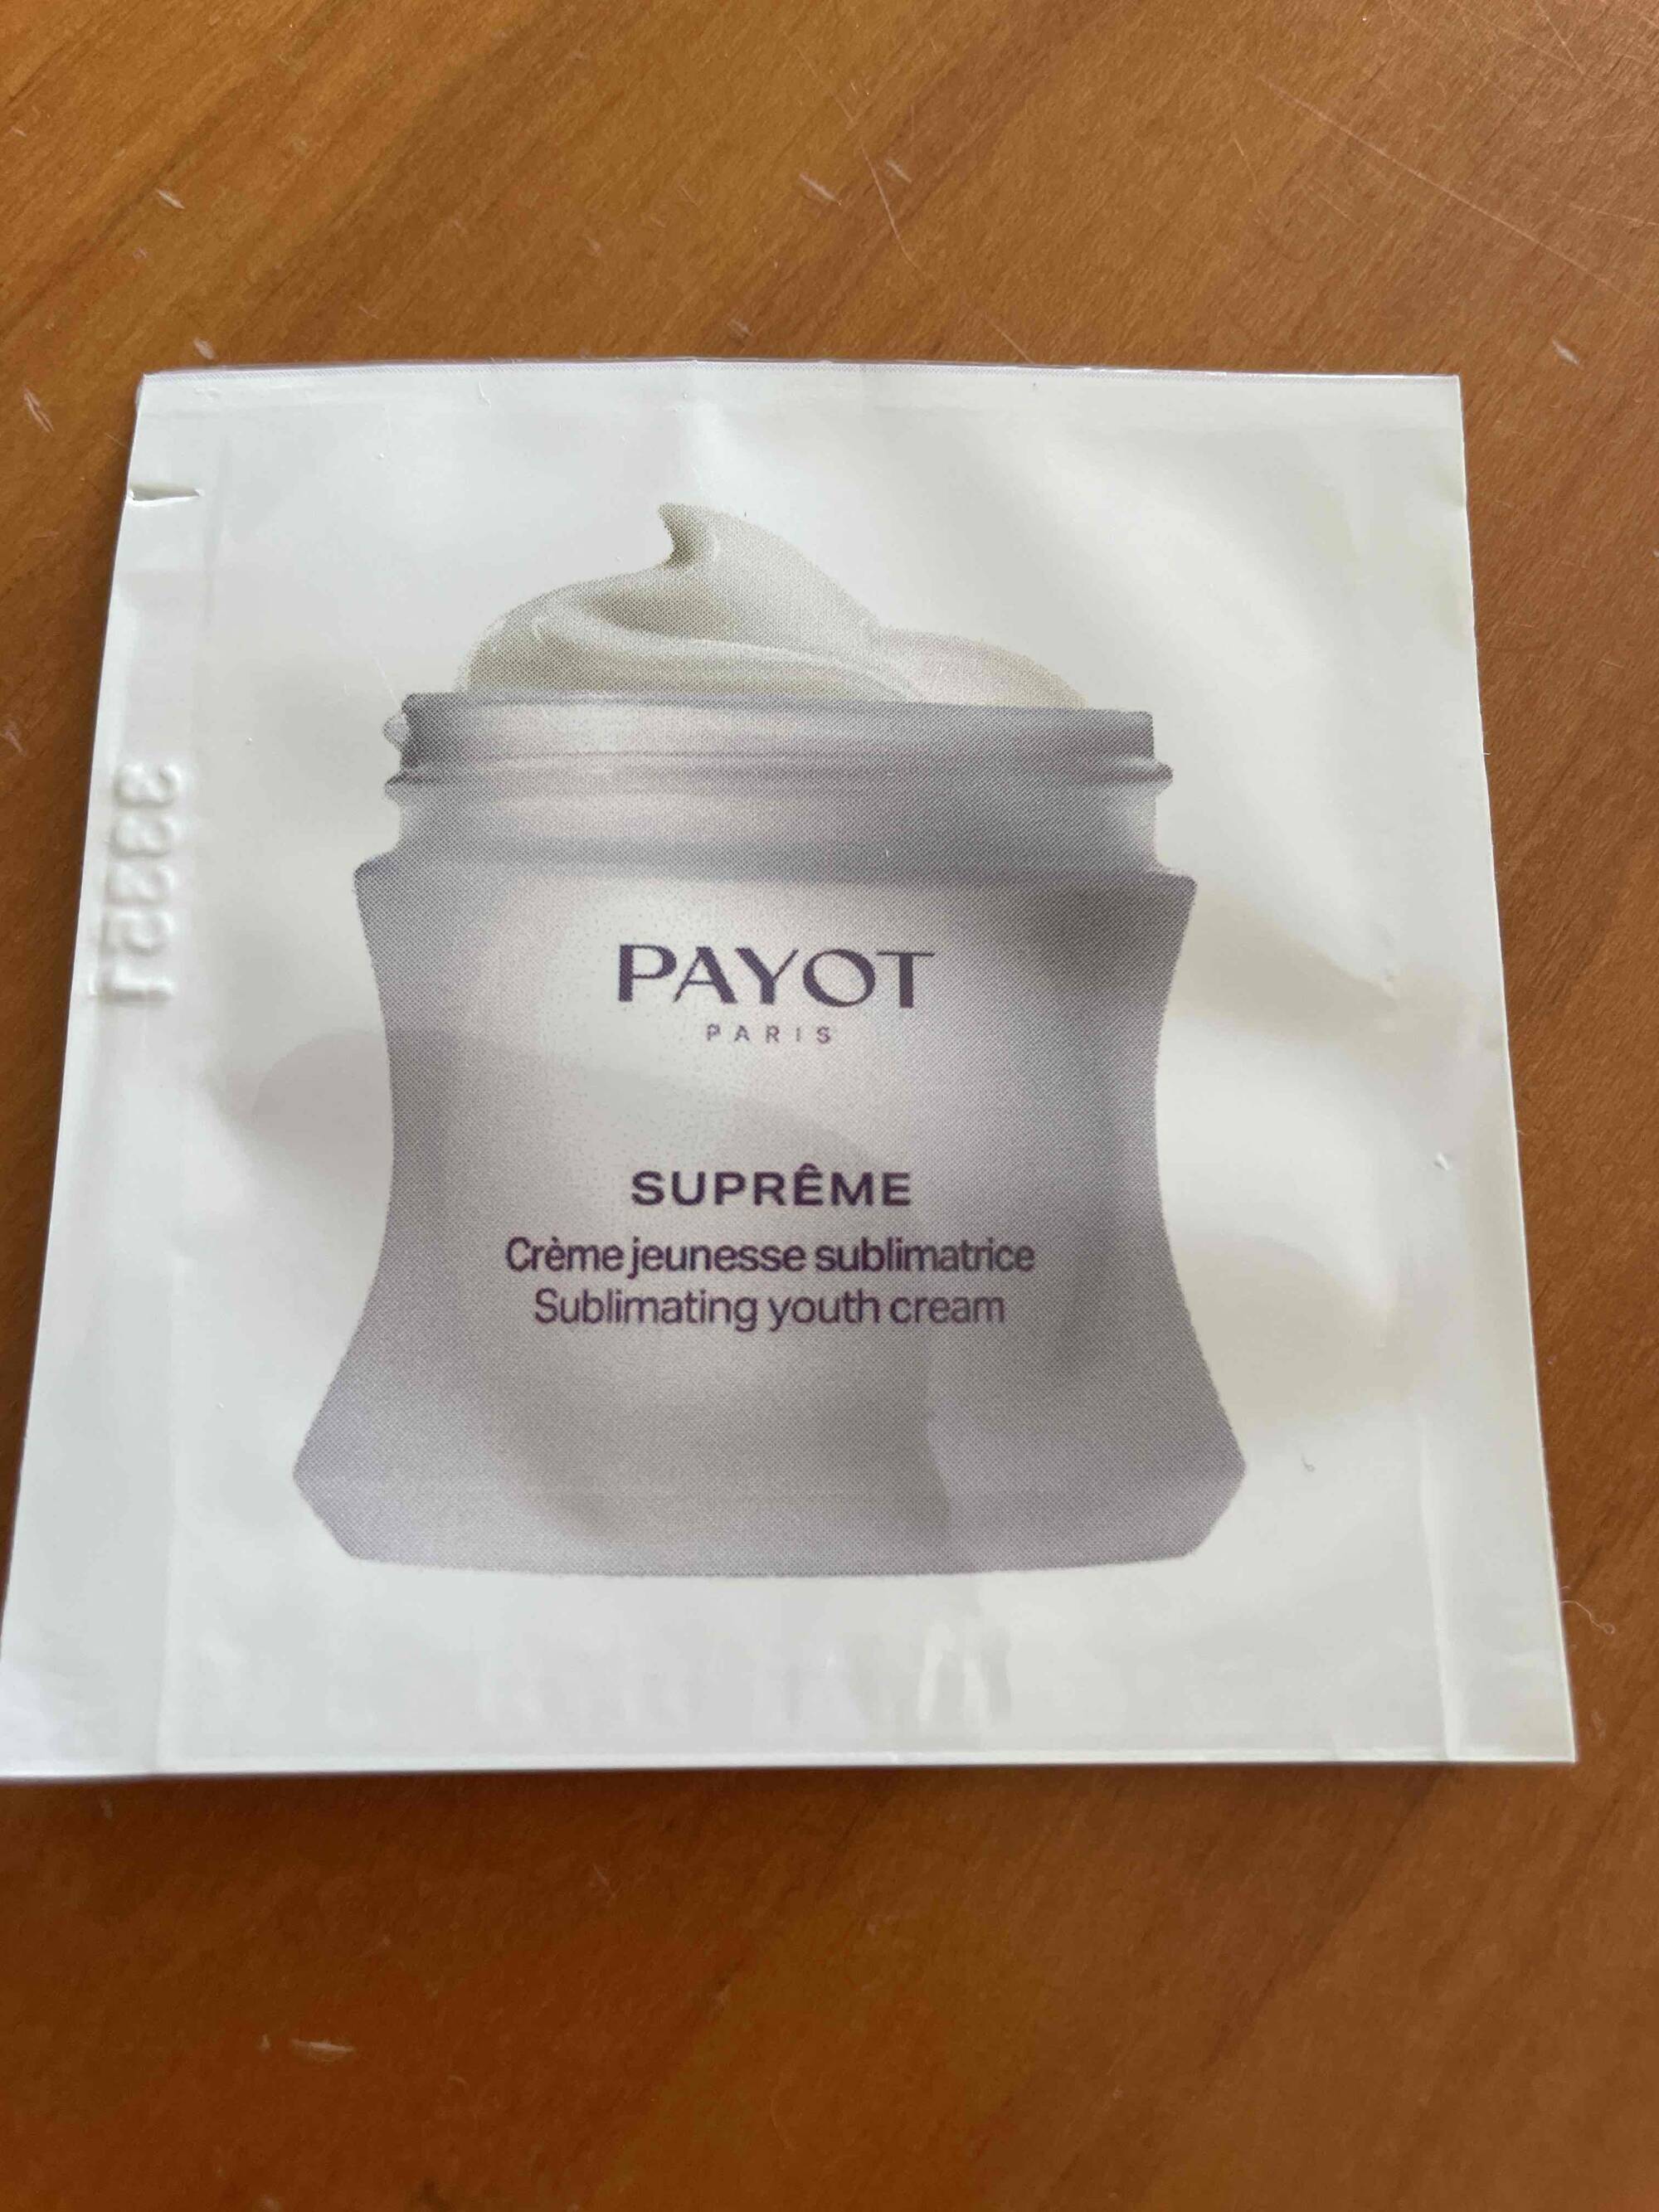 PAYOT - Suprême - Crème jeunesse sublimatrice